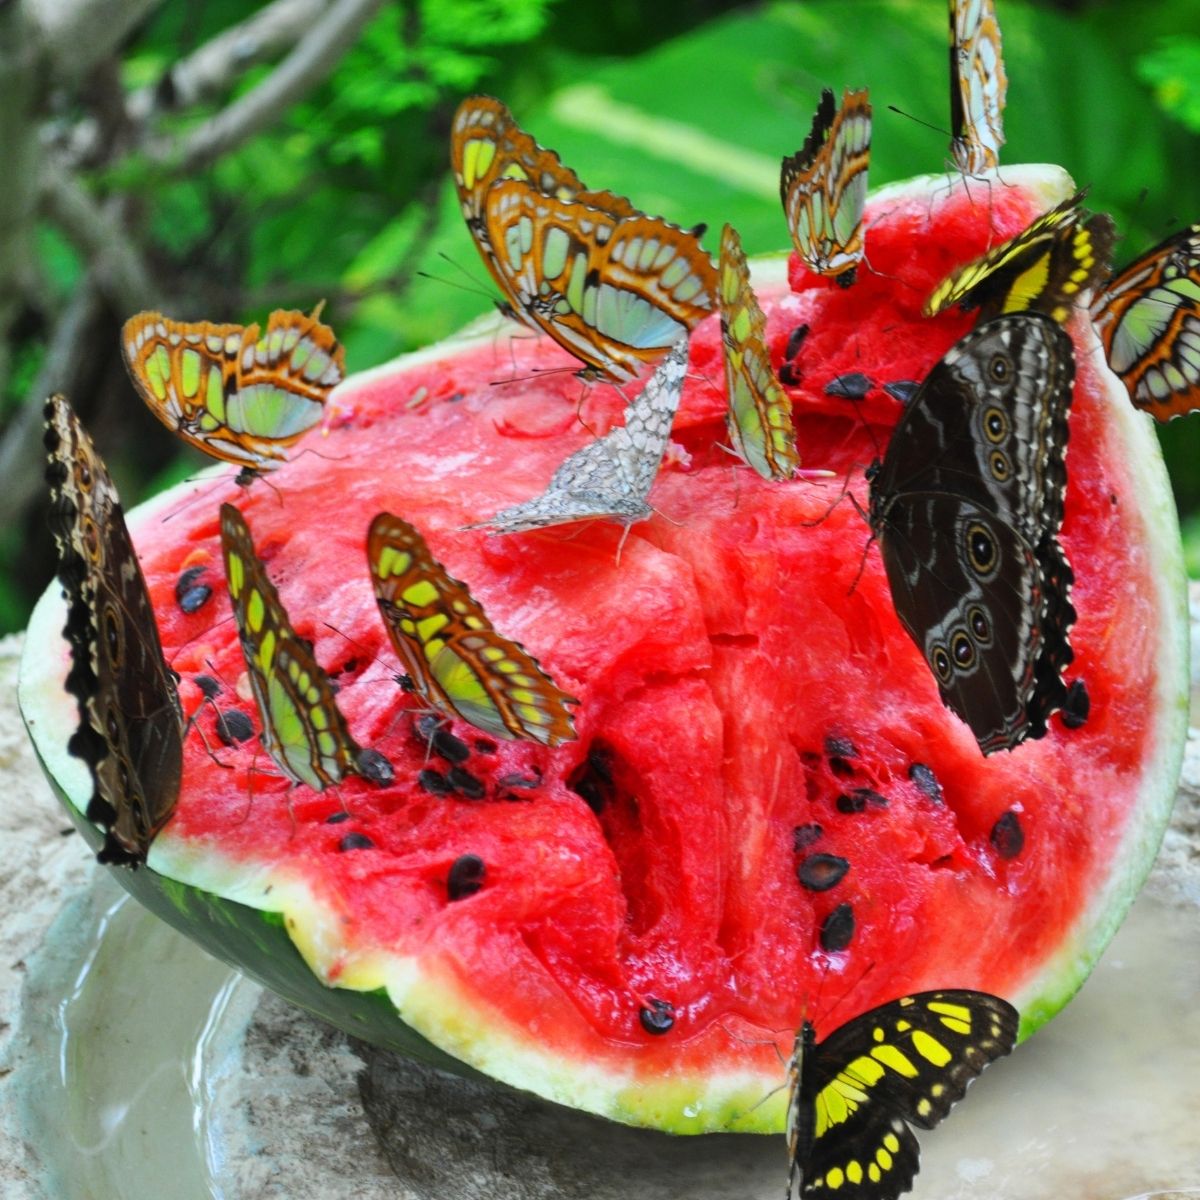 butterflies eating from a ripe watermellon